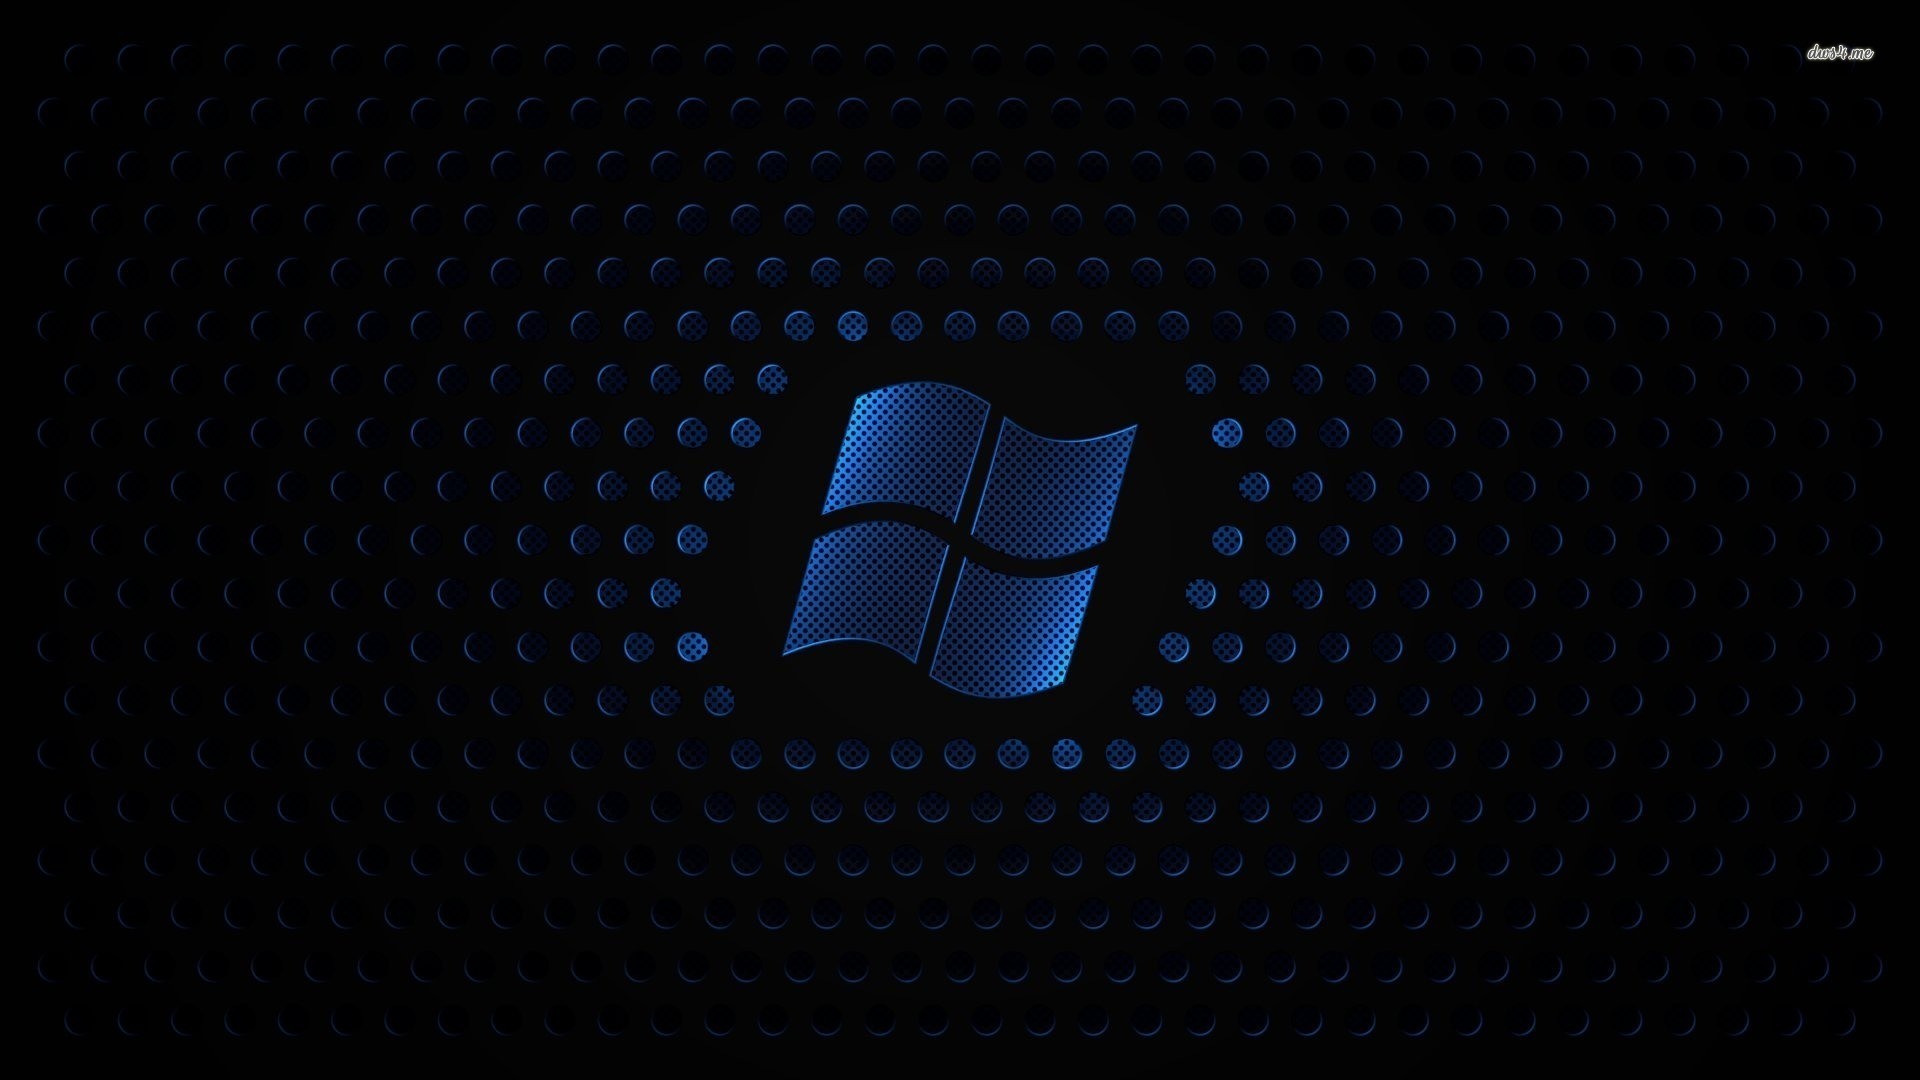 Windows logo on dotted pattern Windows logo on dotted pattern wallpaper – Computer wallpapers – #